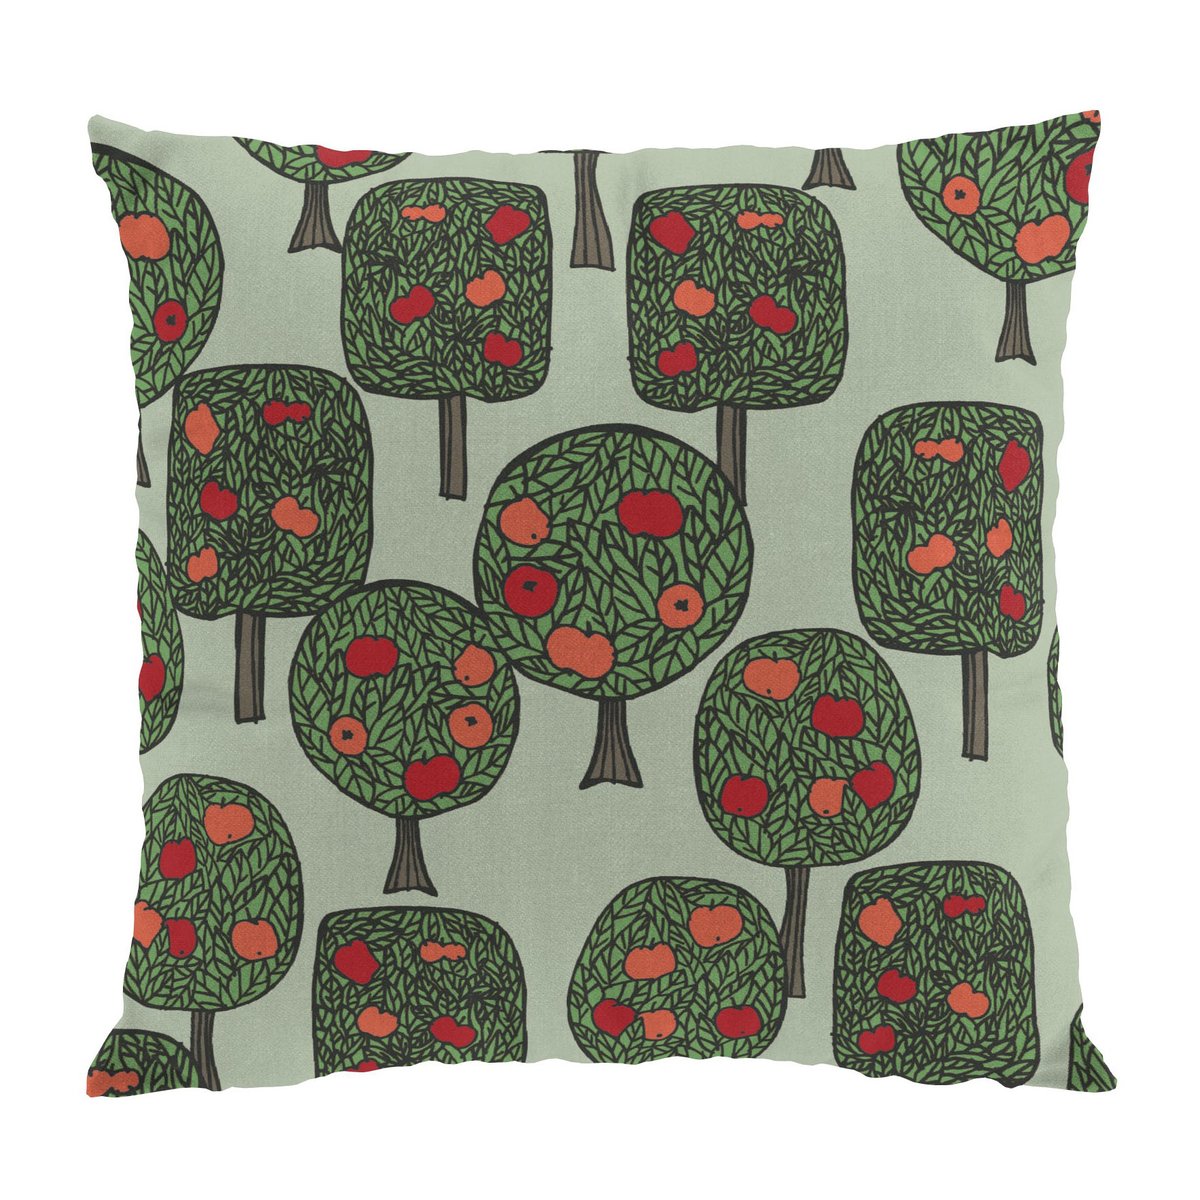 Arvidssons Textil Äppelskogen tyynynpäällinen 47 x 47 cm Vihreä-punainen